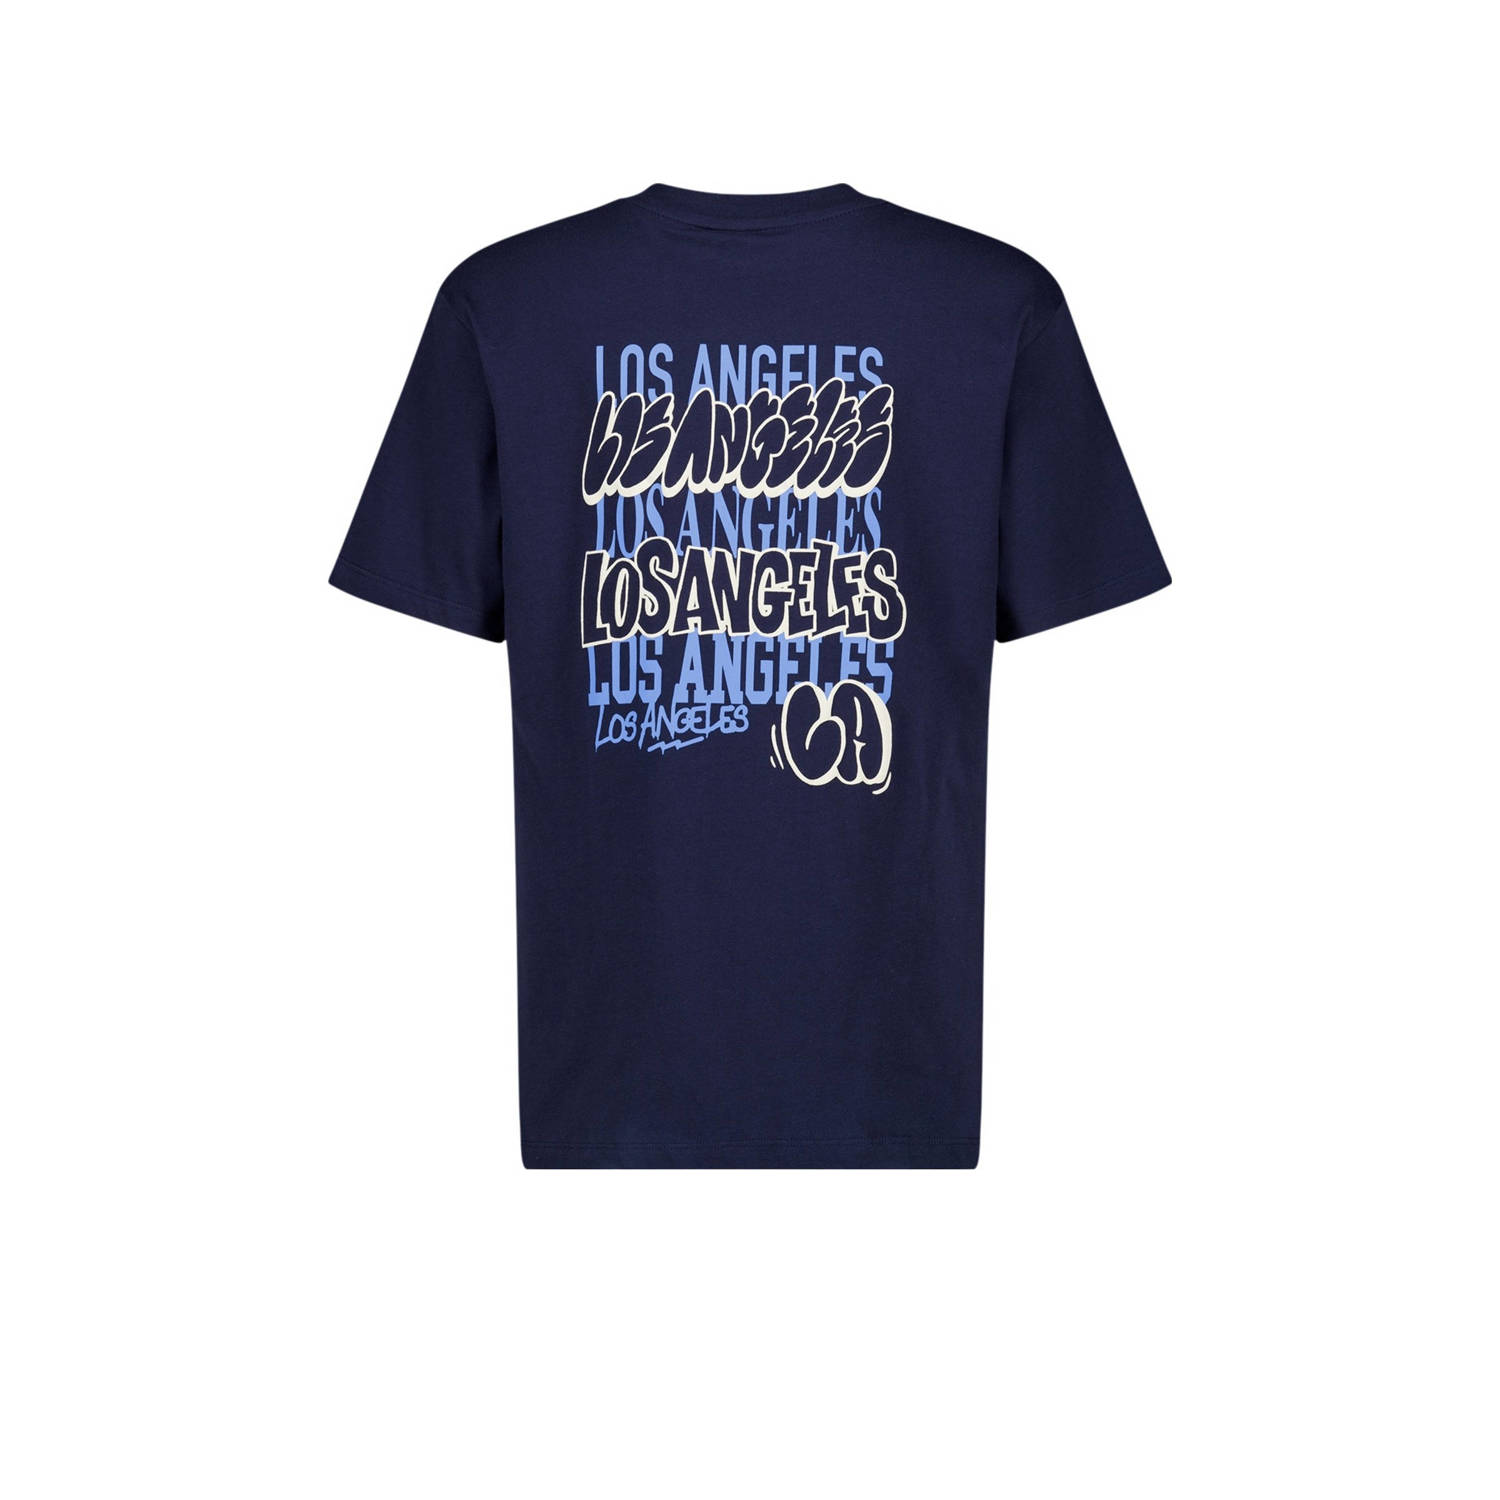 America Today T-shirt met backprint donkerblauw